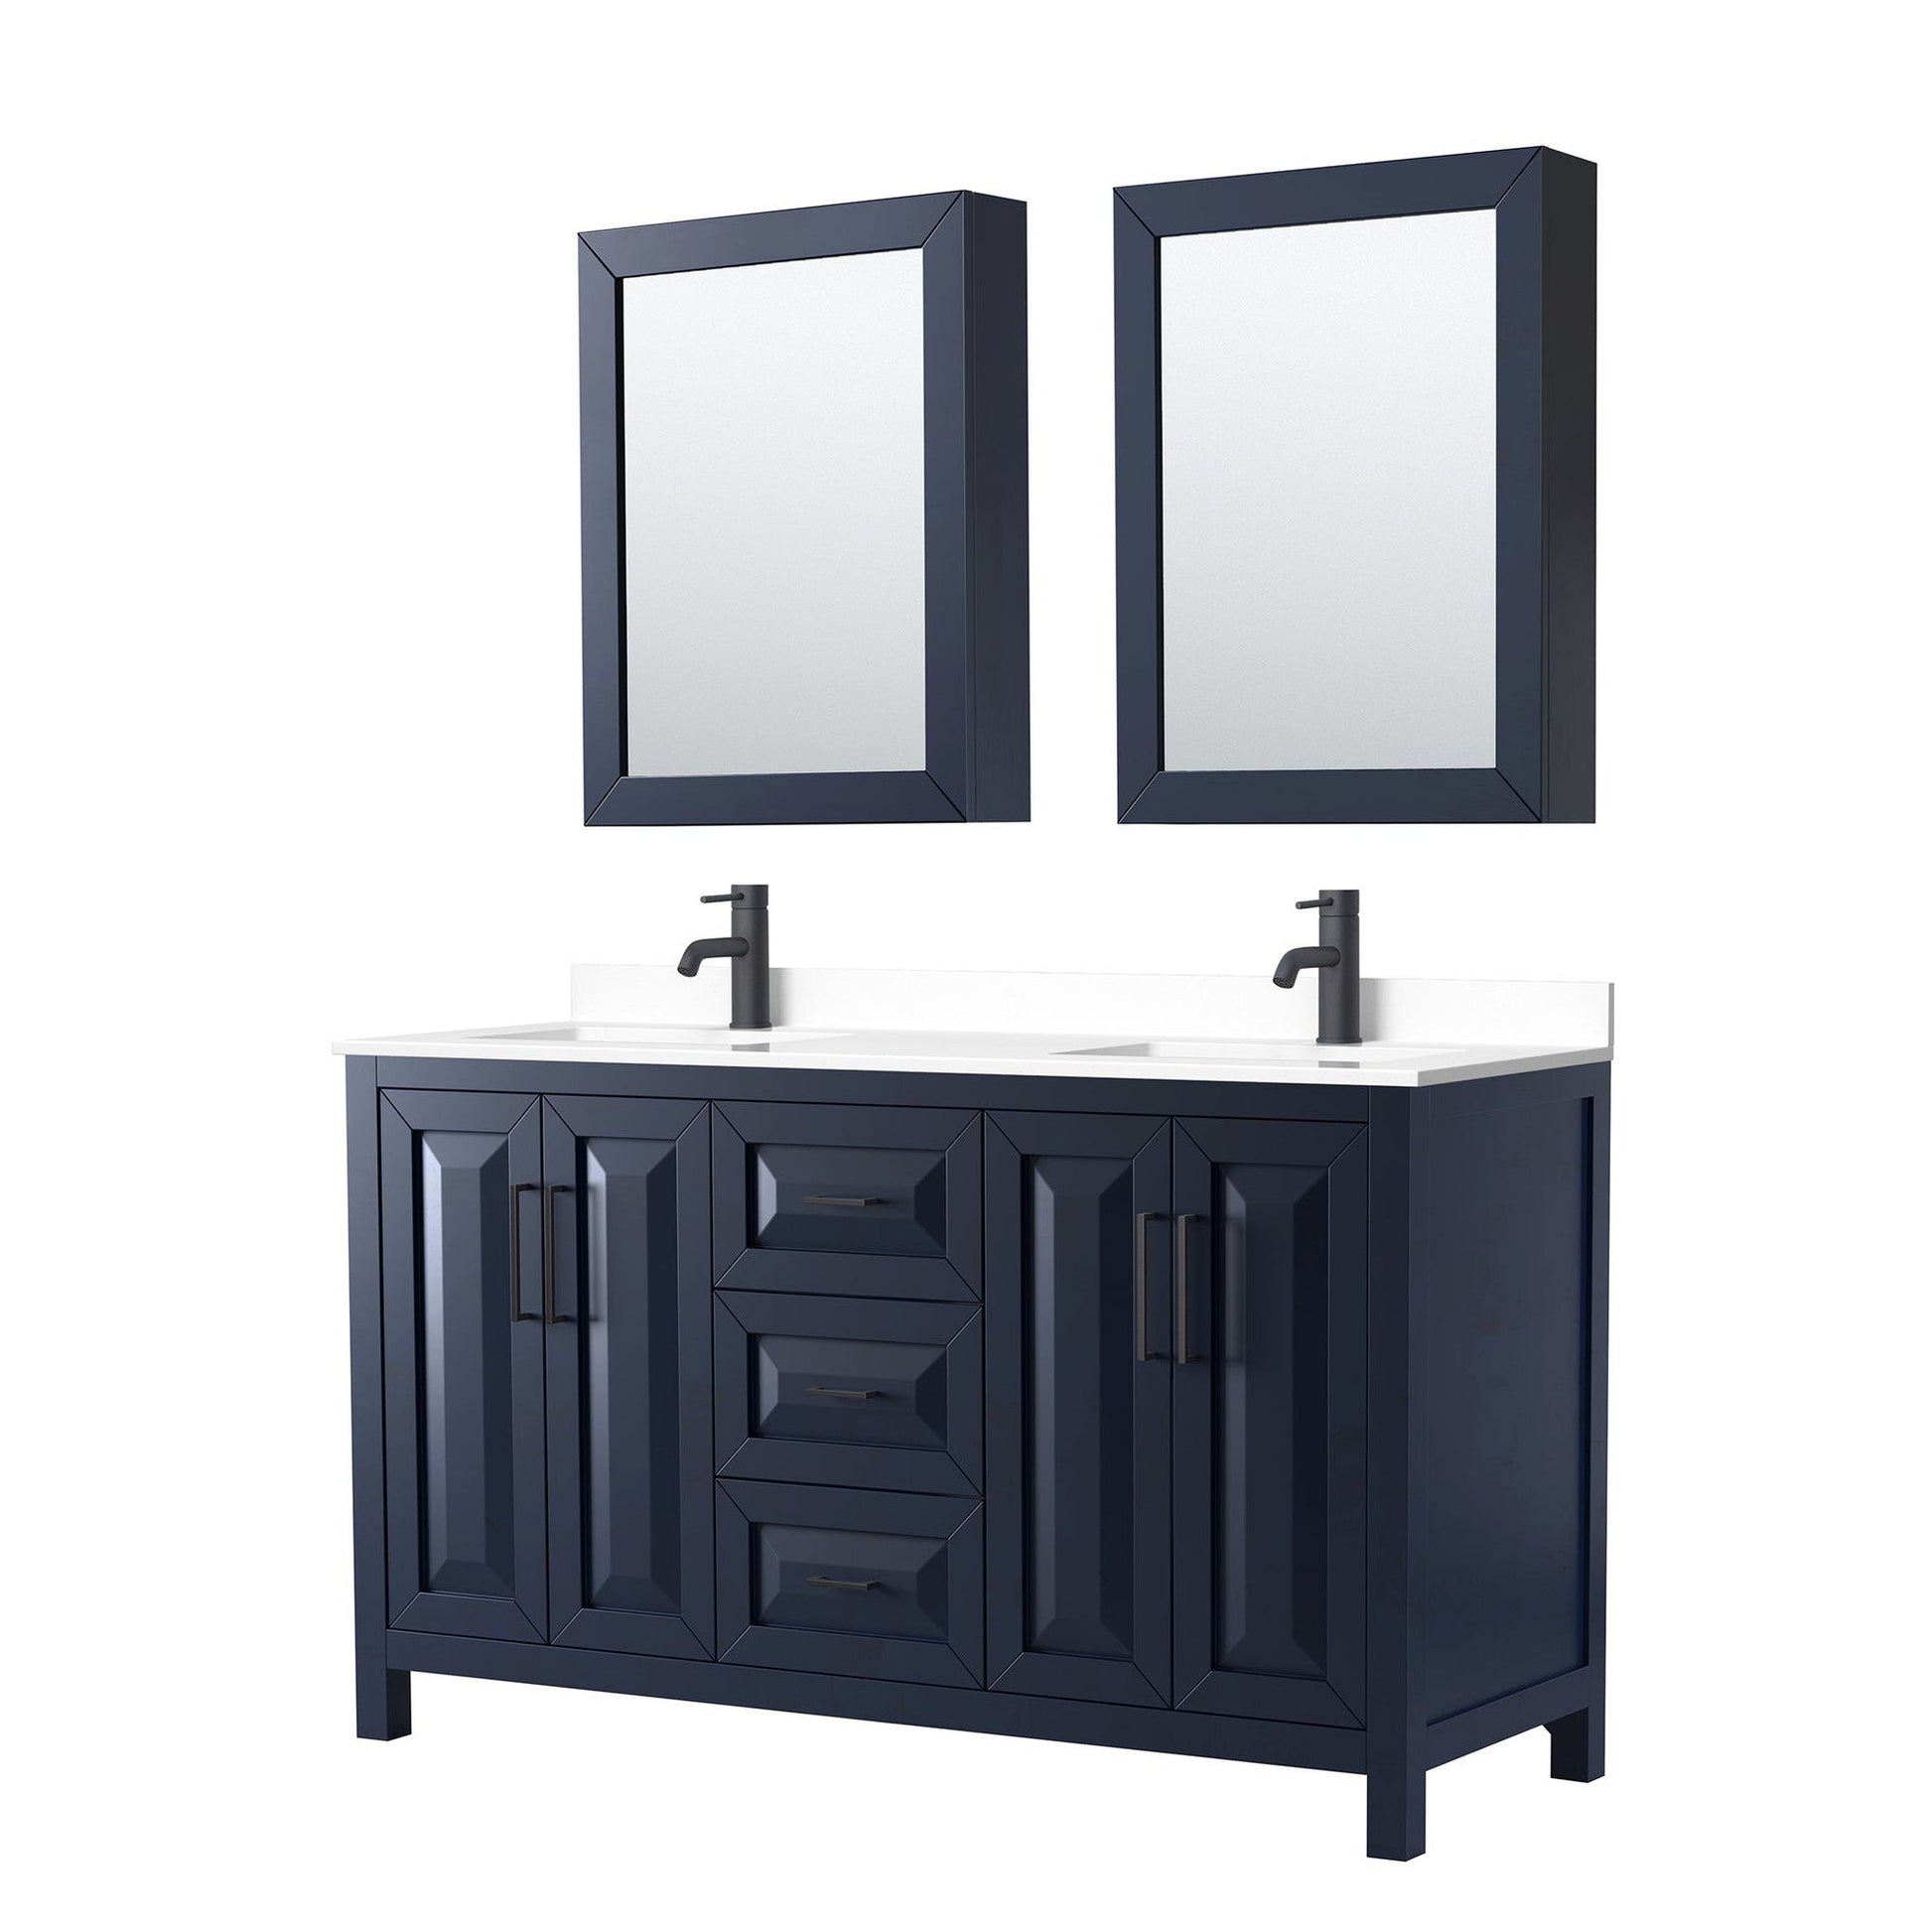 Daria 60" Double Bathroom Vanity in Dark Blue, White Cultured Marble Countertop, Undermount Square Sinks, Matte Black Trim, Medicine Cabinets